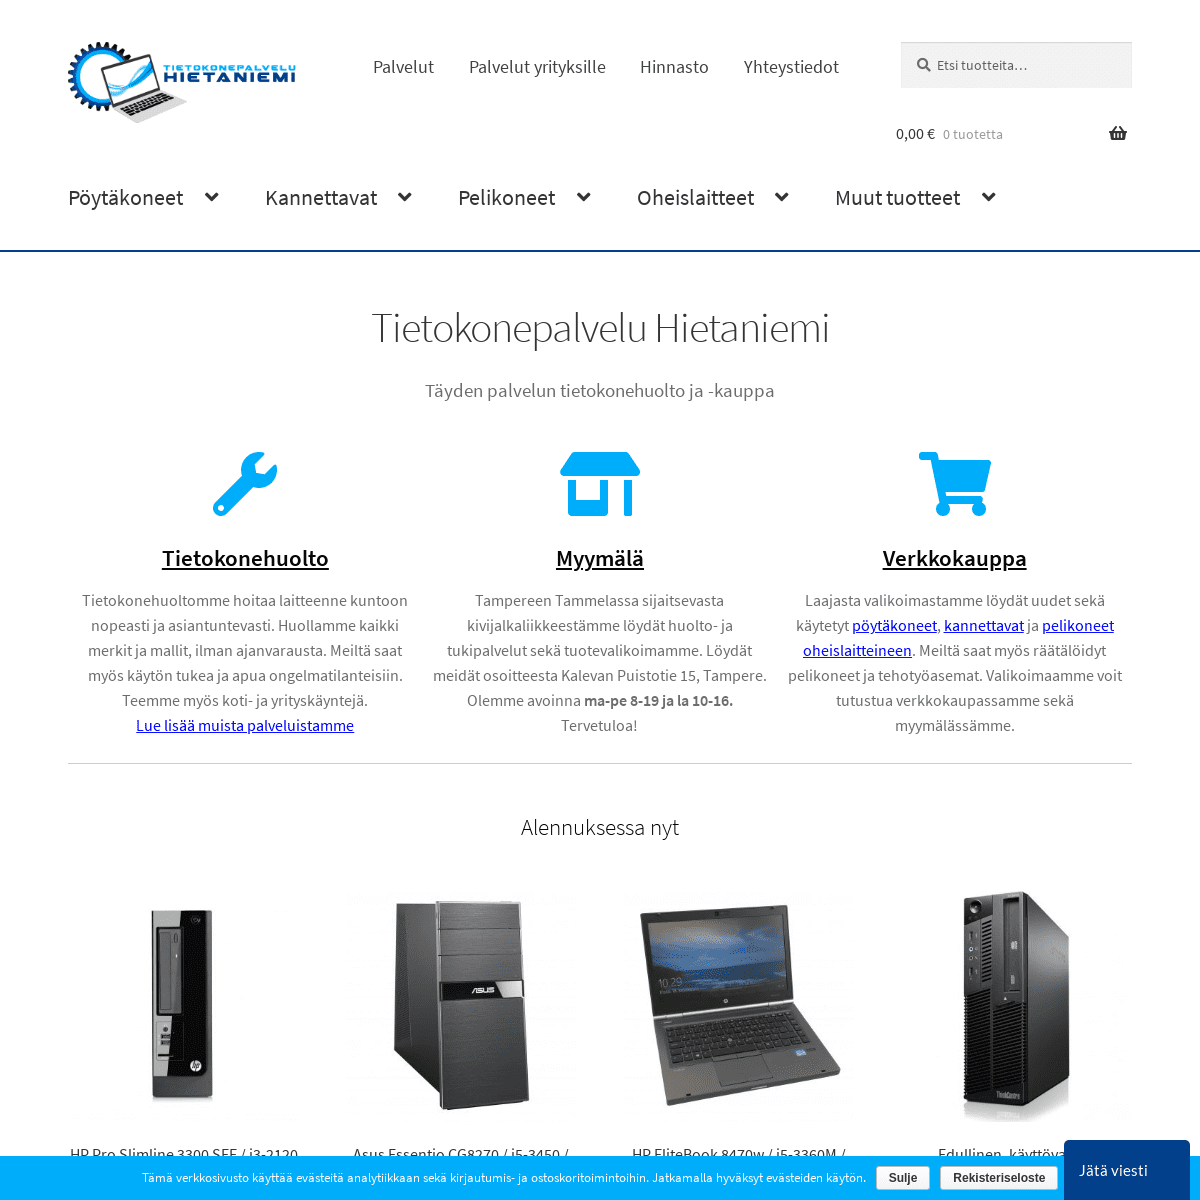 A complete backup of tietokonepalveluhietaniemi.fi